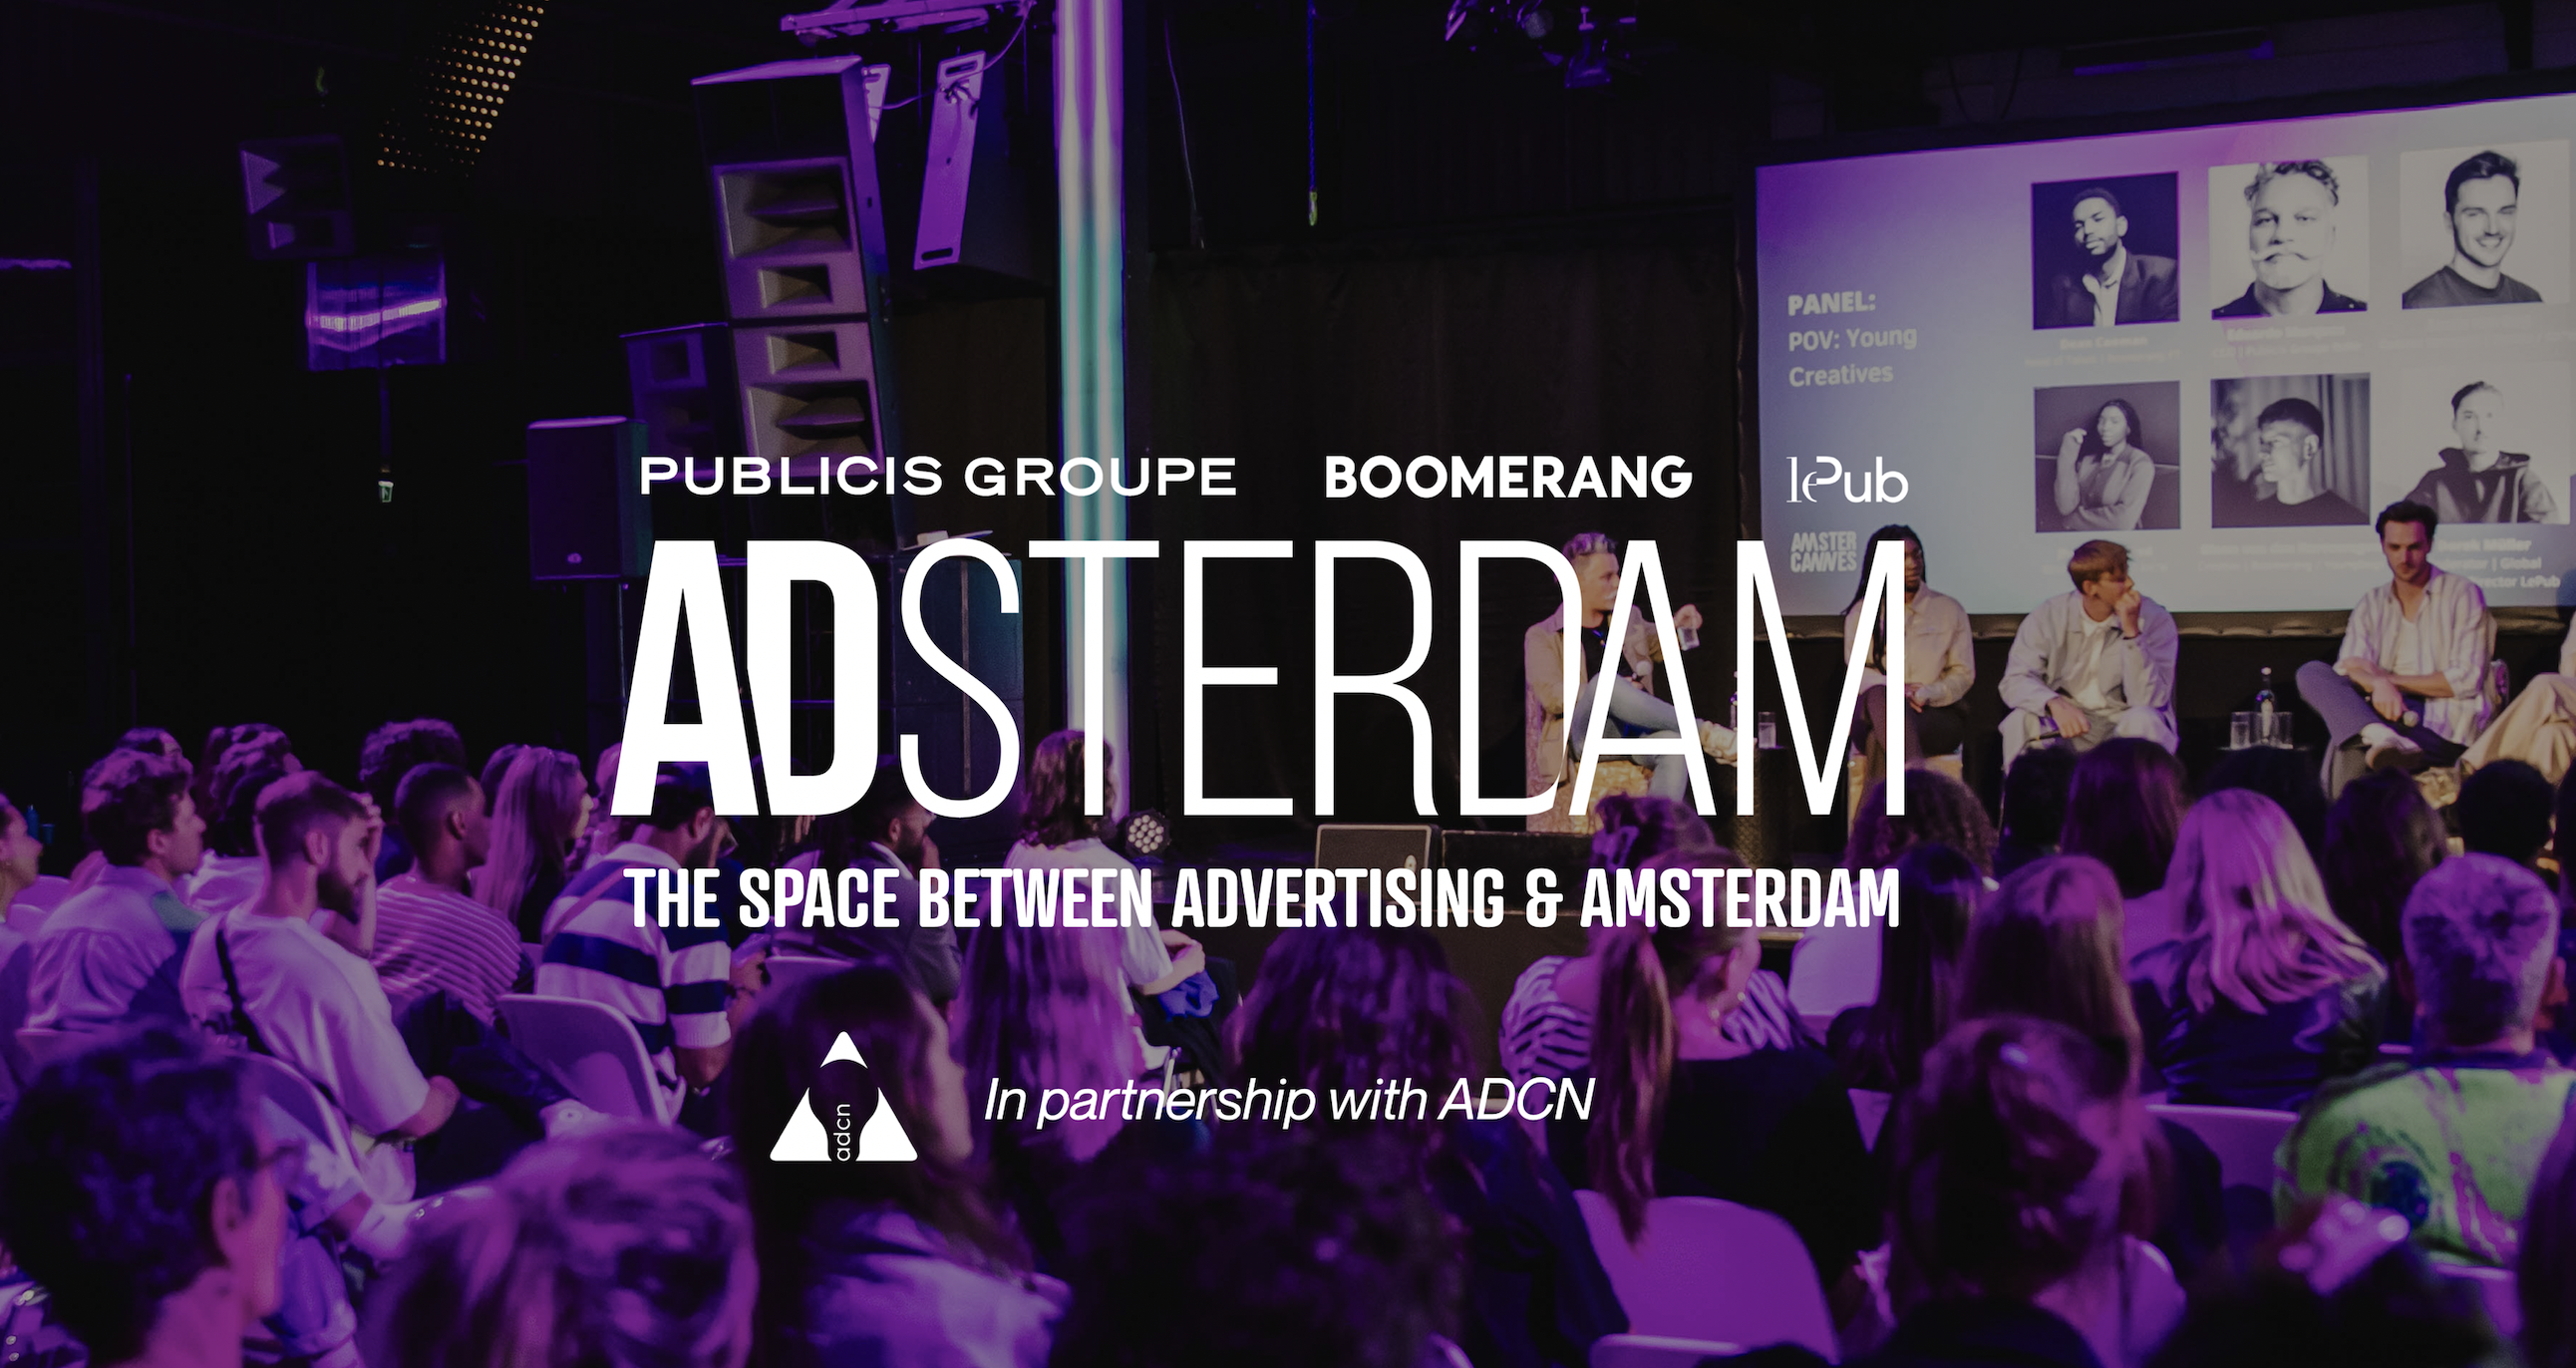 ADsterdam viert advertising op een Amsterdams festival terrein